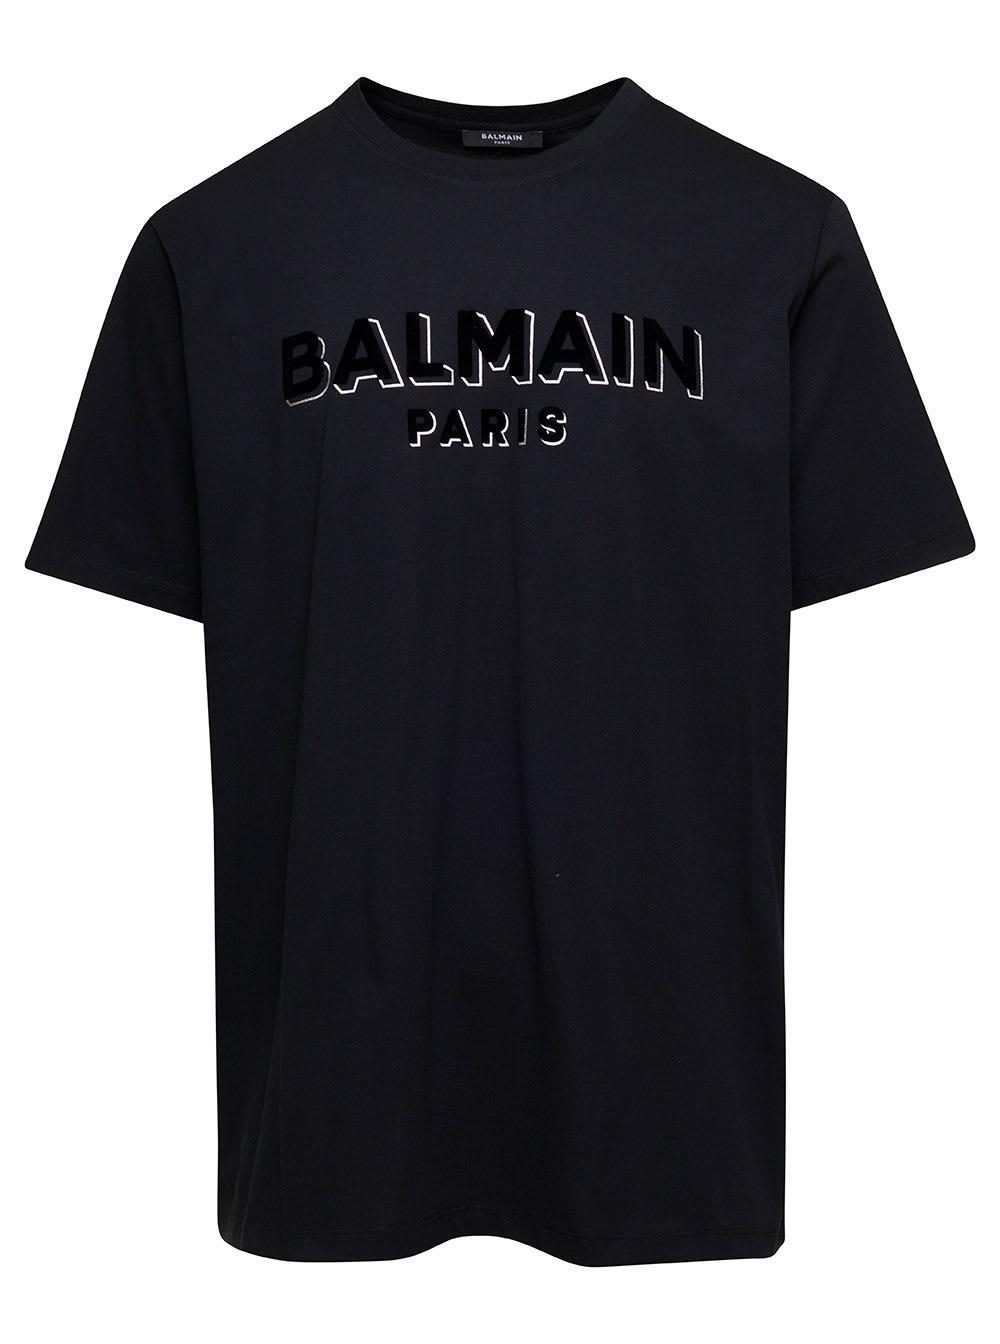 Balmain Men's Flock Foil Logo Bulky T-Shirt